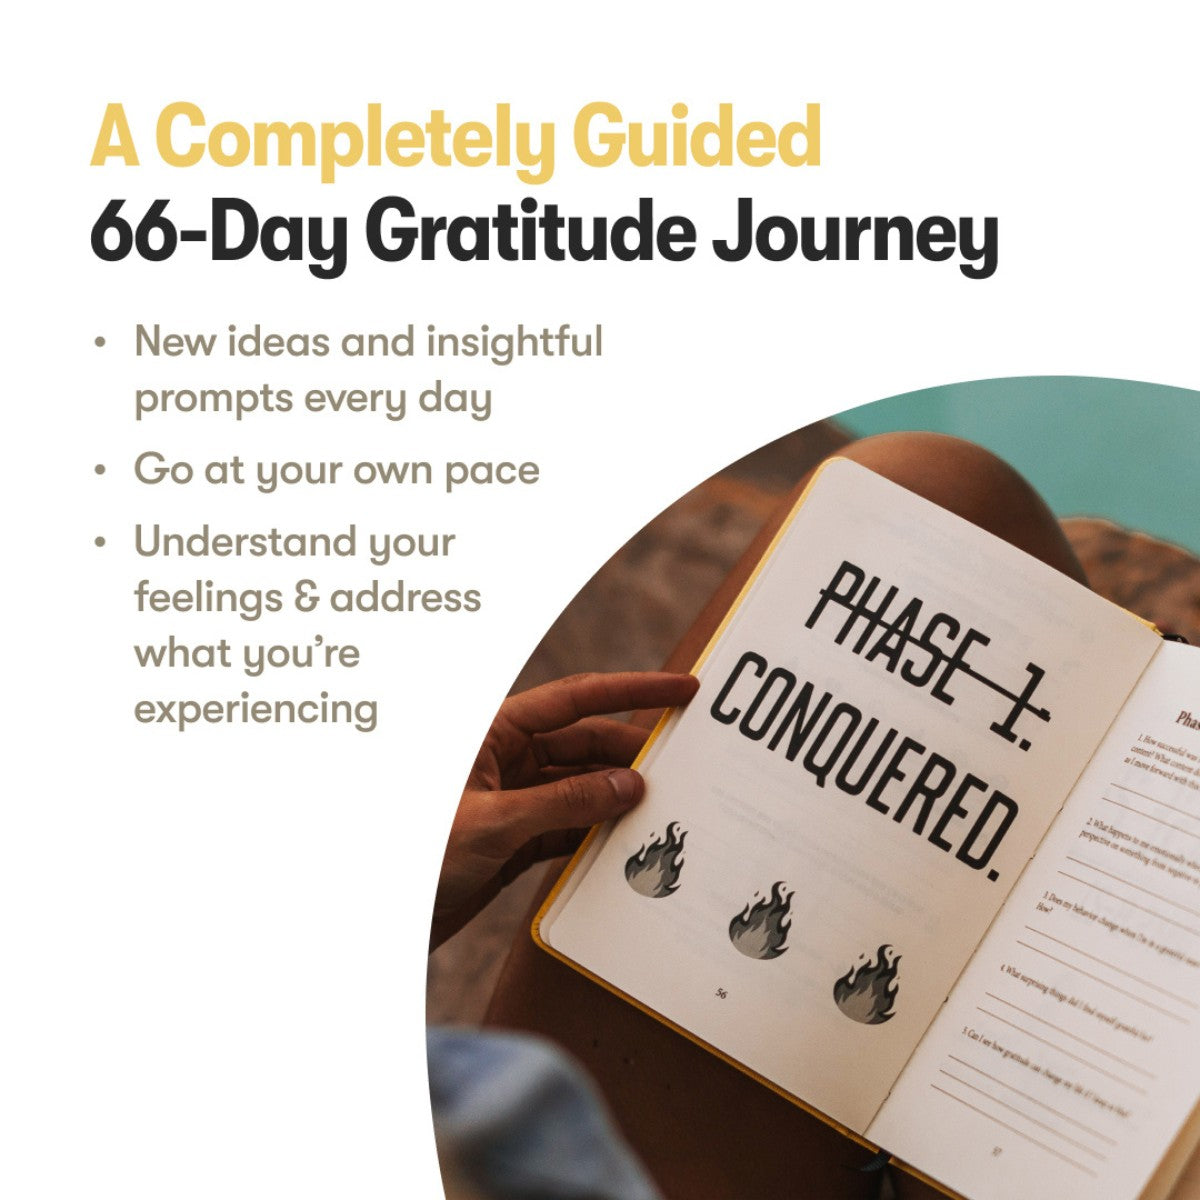 Gratitude Sidekick Journal